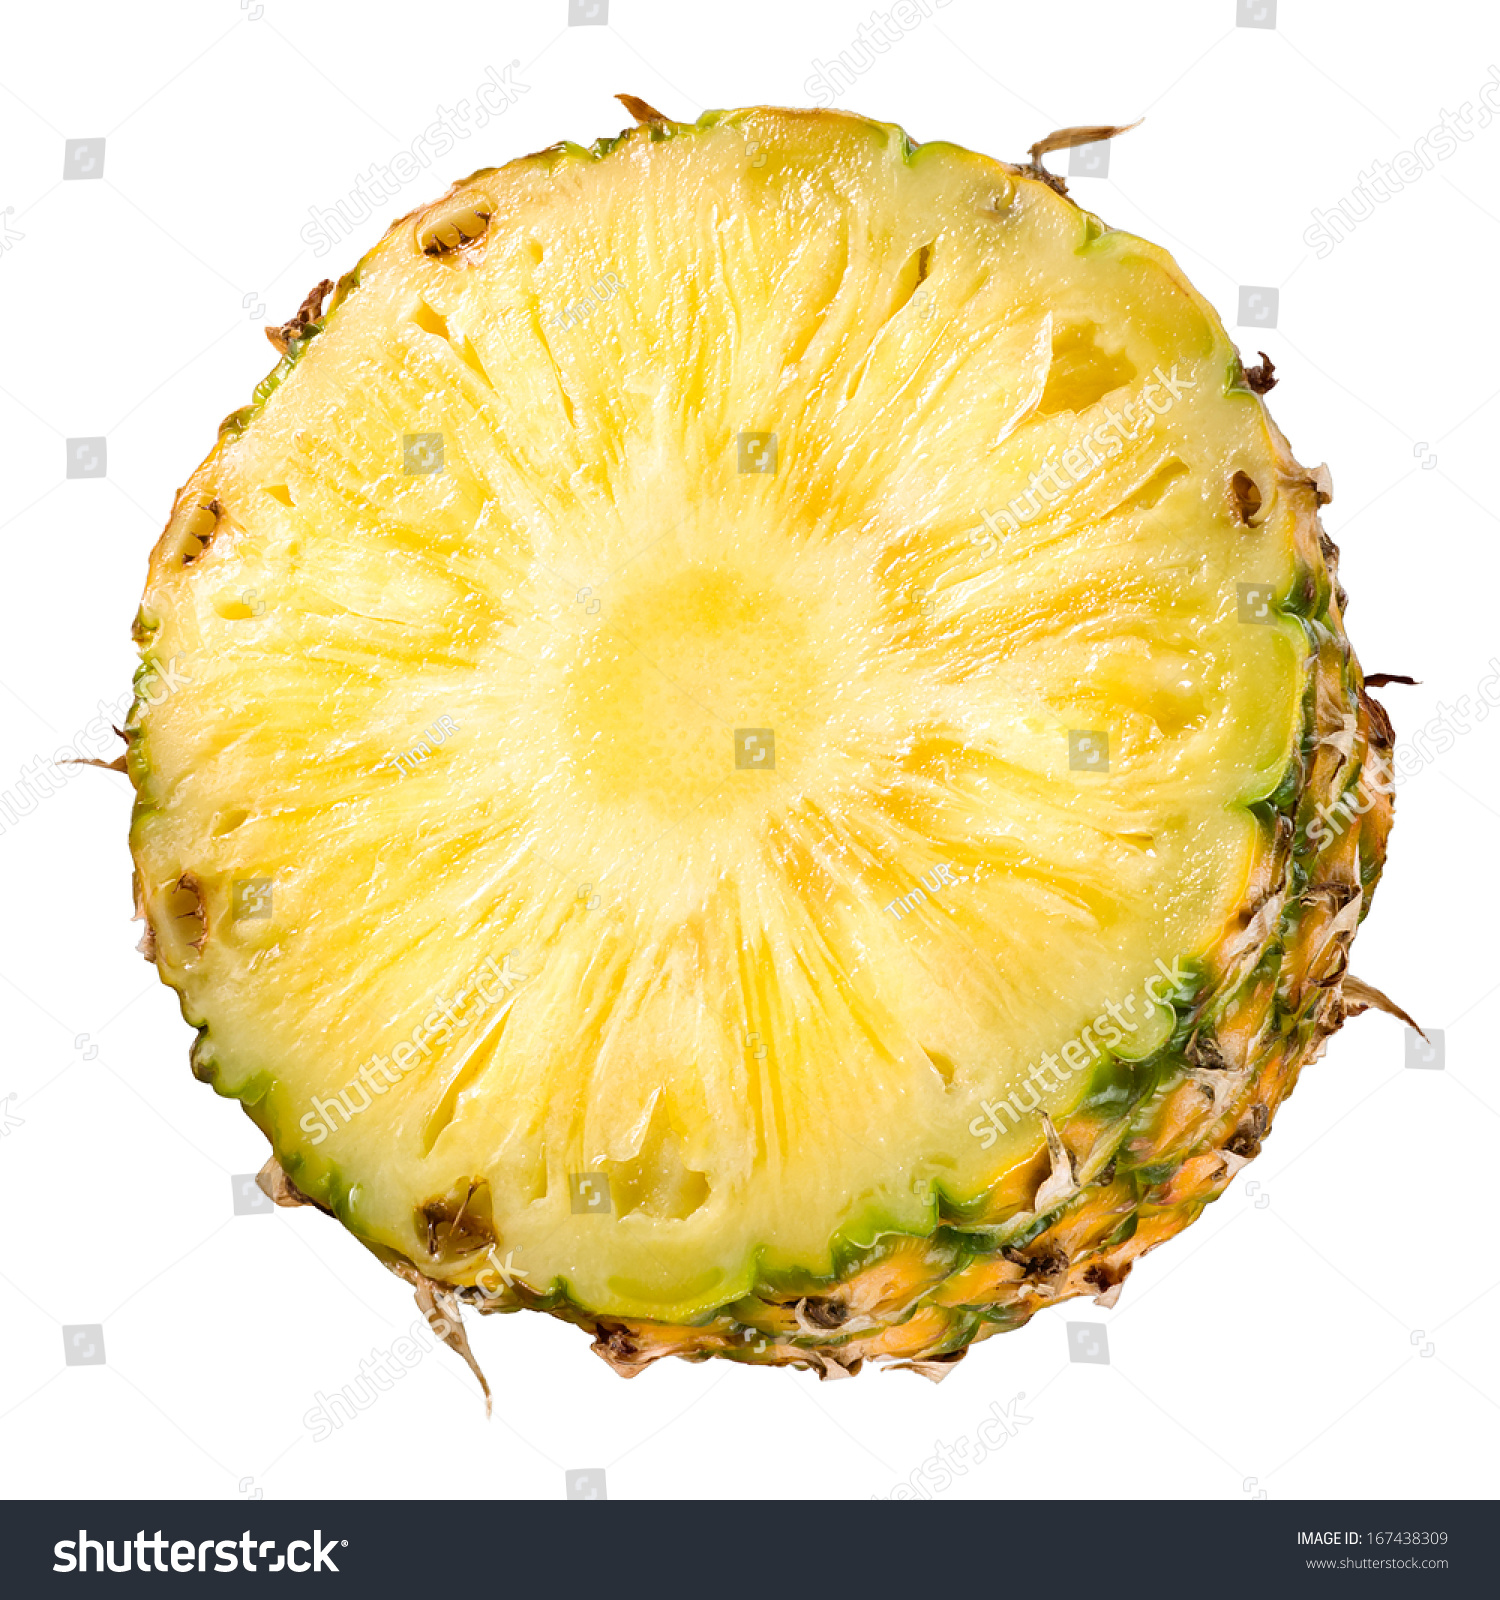 Sliced pineapple photo